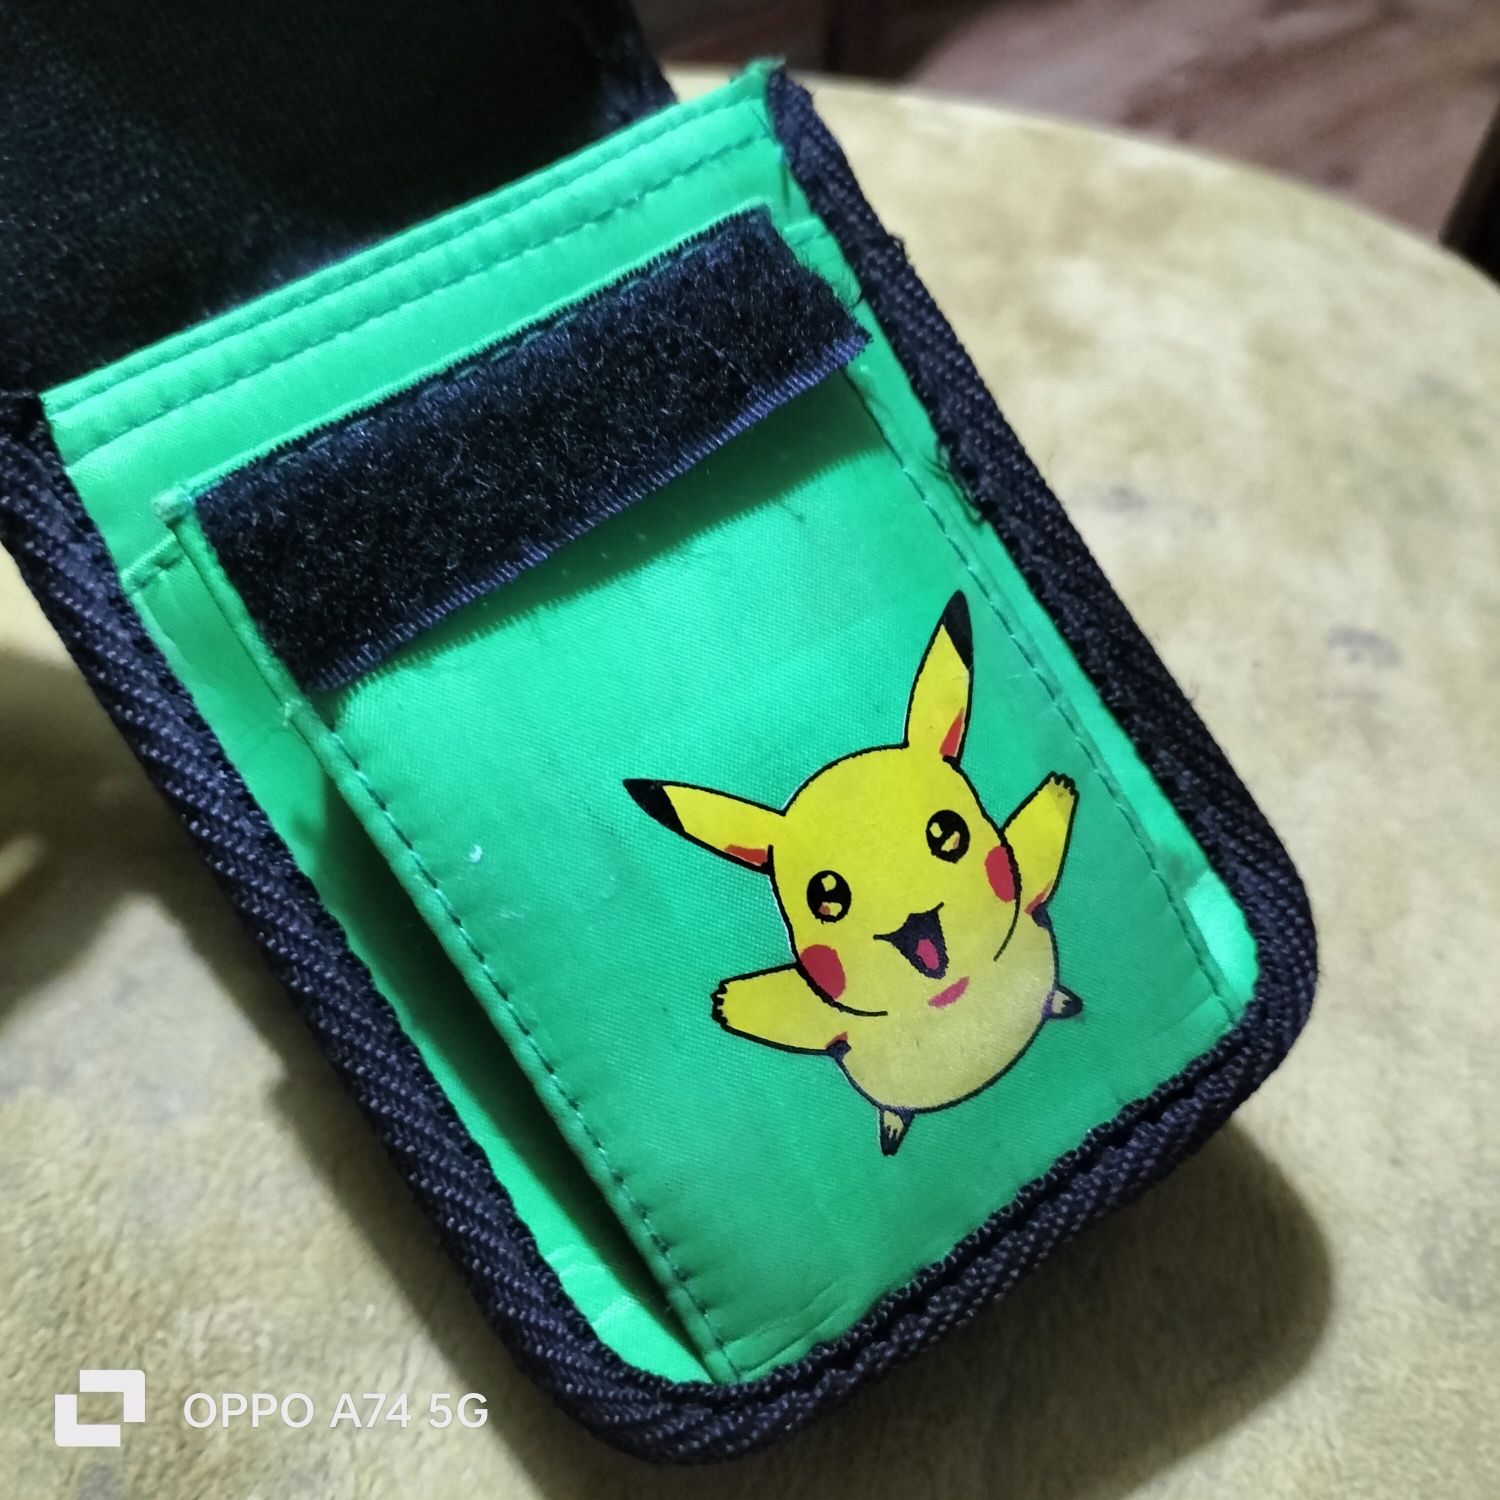 HIT Rarytas Oryginalne Etui Pokrowiec Case na Gameboy Color Pikachu